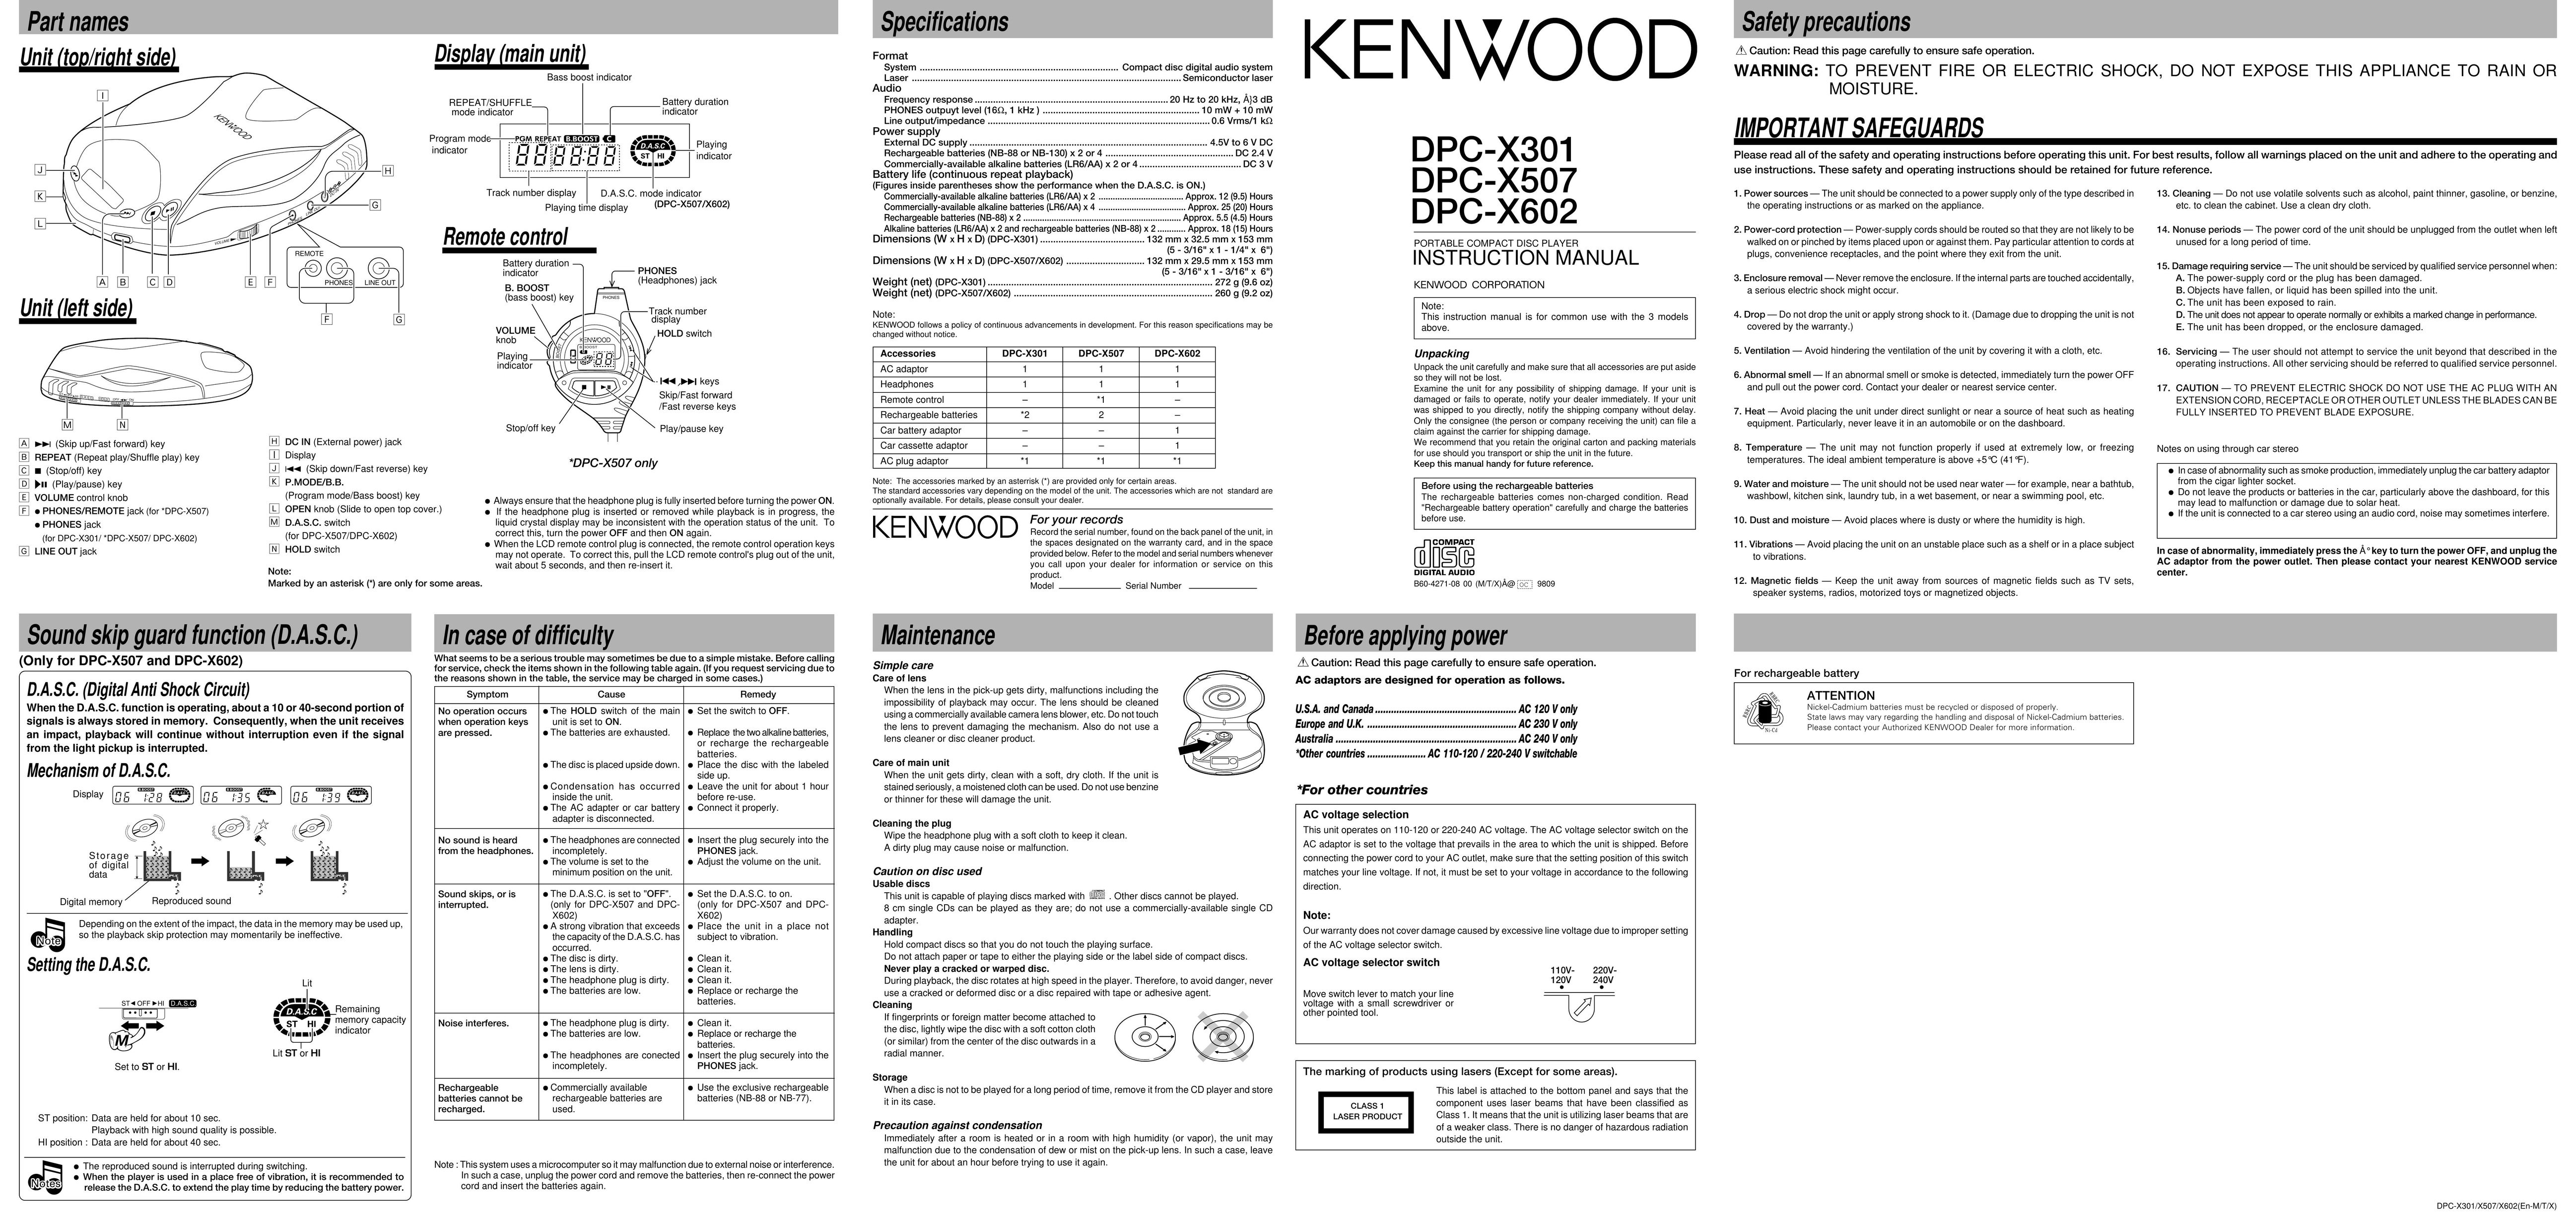 Kenwood DPC-X602 MP3 Player User Manual